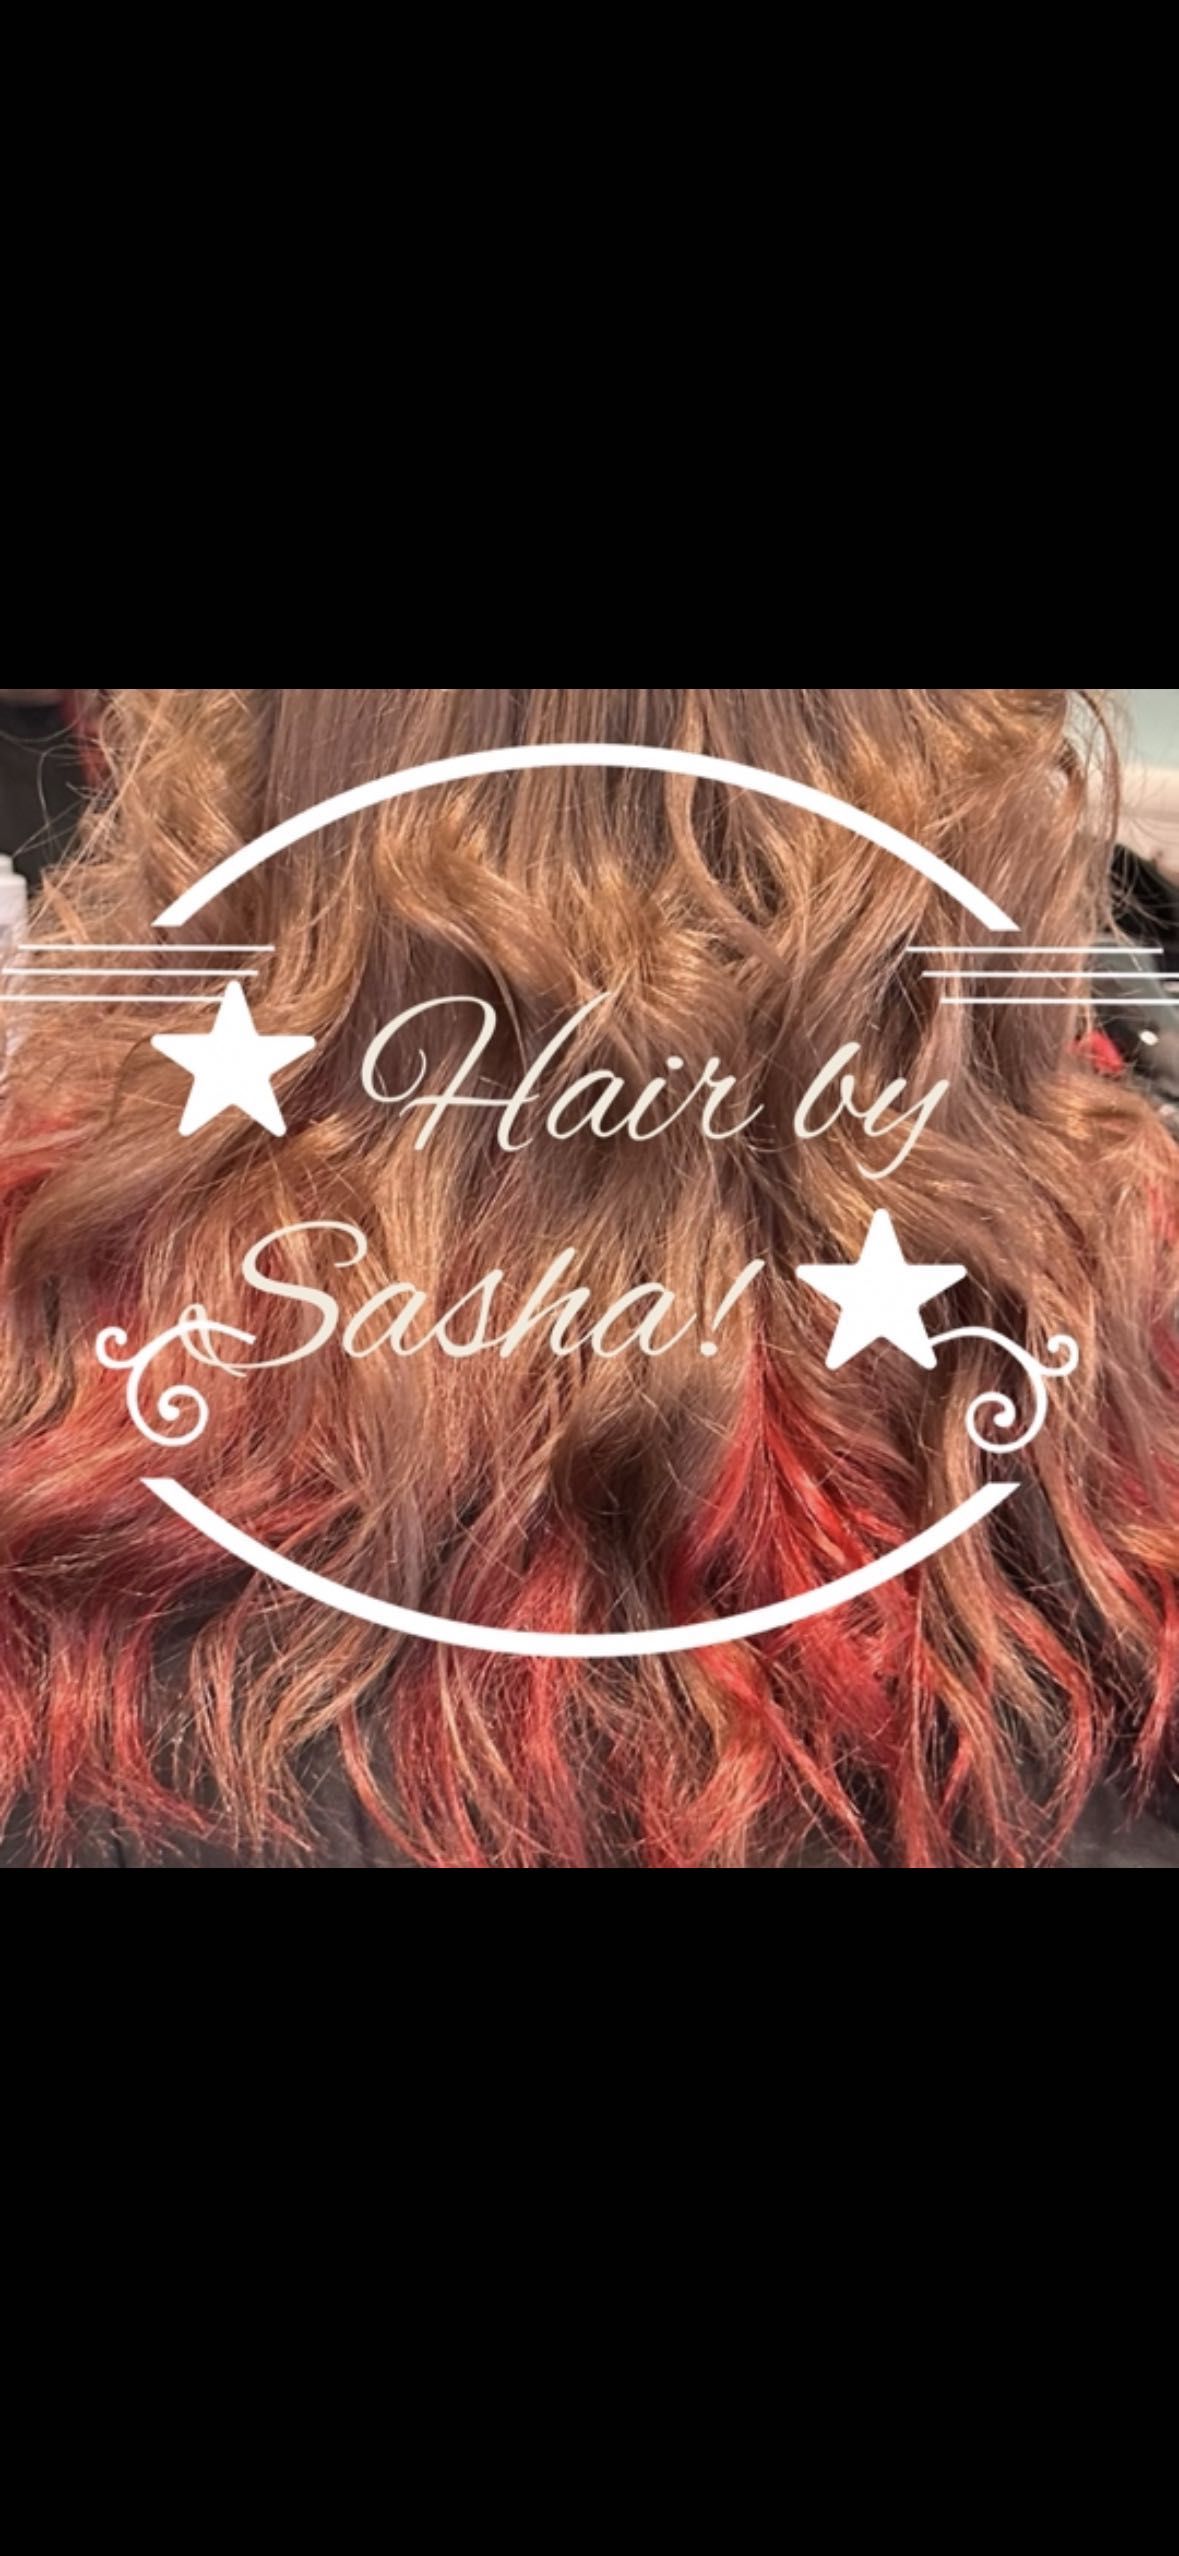 Hair_by_sasha, 21 Lordswood Road, B17 9RP, Birmingham